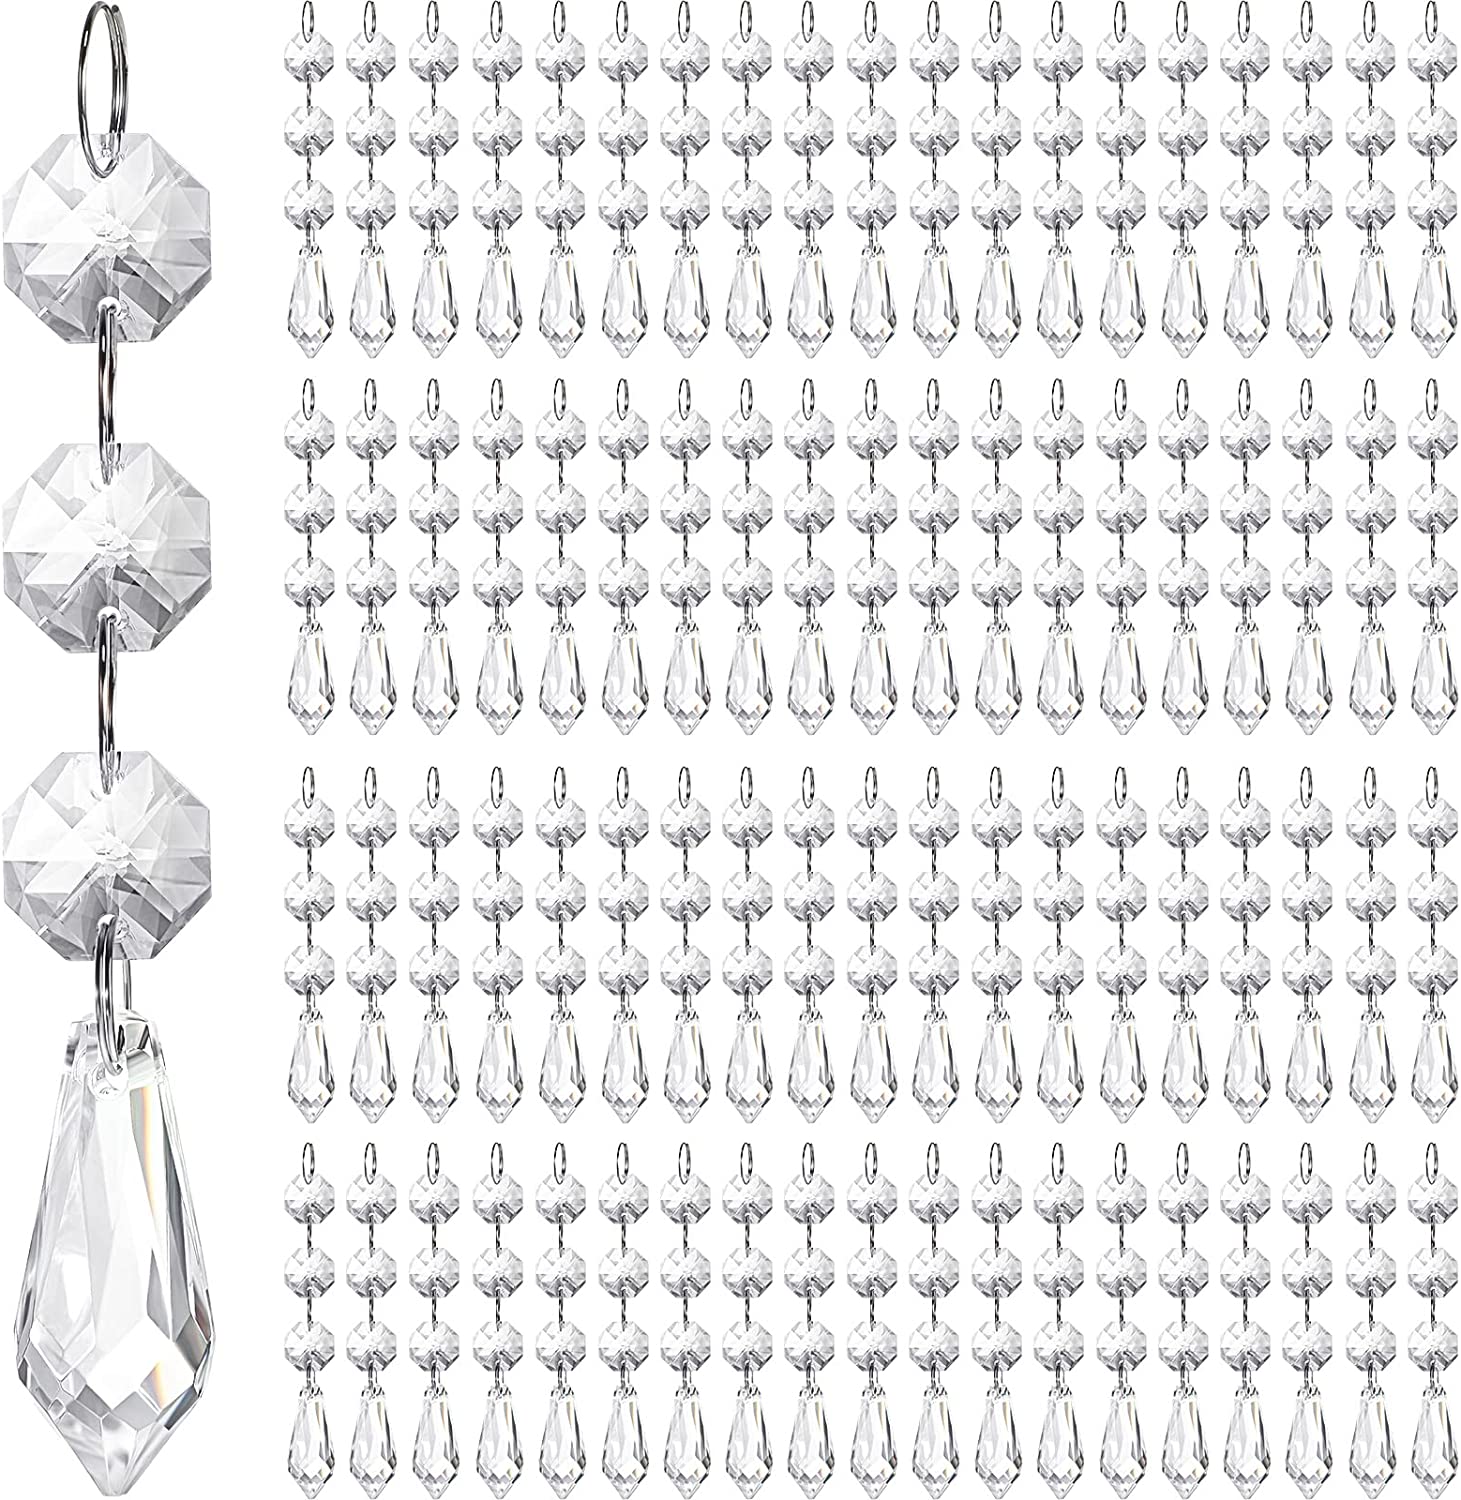  99ft Acrylic Crystal Garland Strands - Hanging